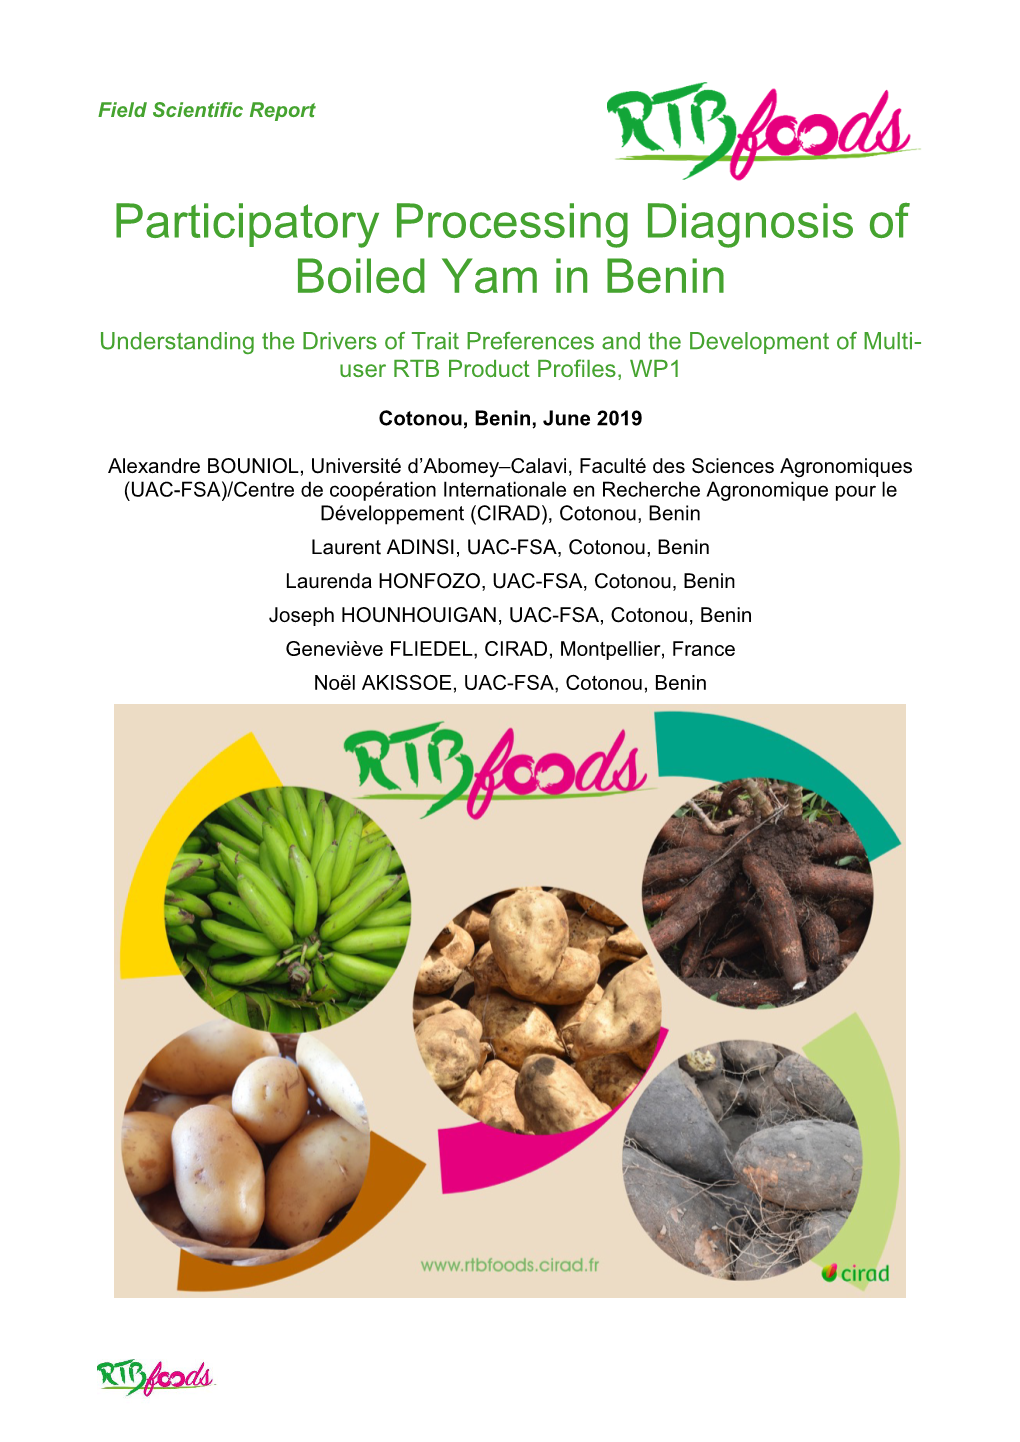 Boiled Yam-Benin